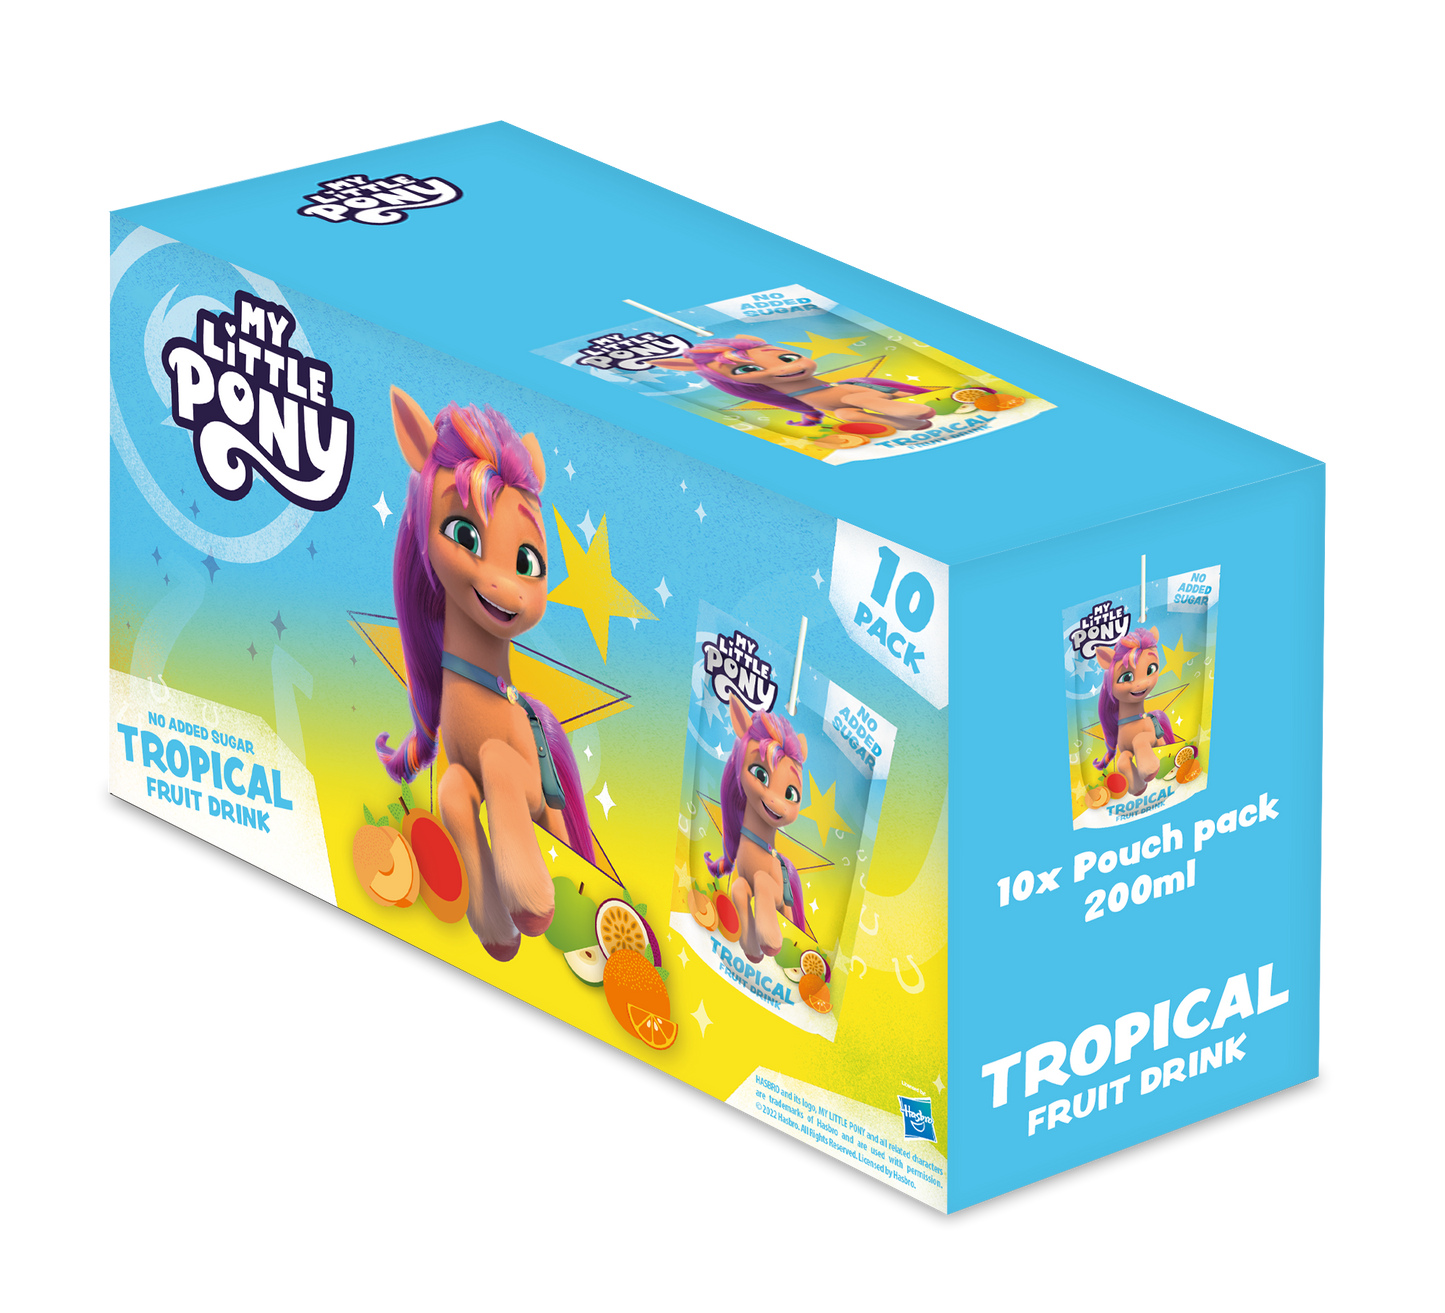 My Little Pony No Added Sugar Tropical Fruit Drink 200ml